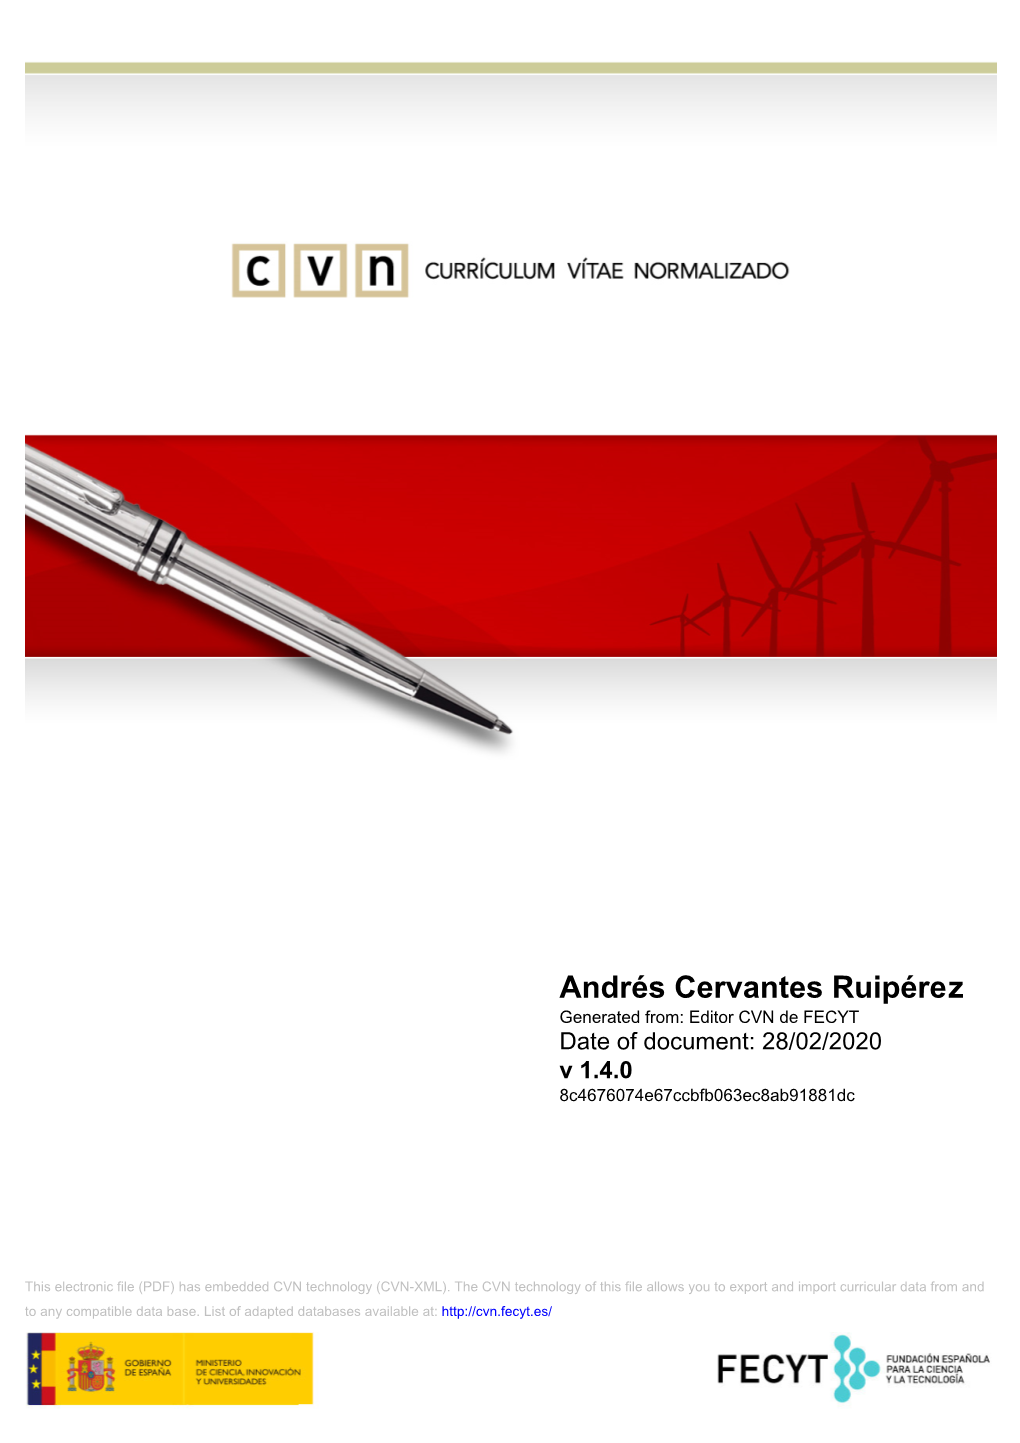 Andrés Cervantes Ruipérez Generated From: Editor CVN De FECYT Date of Document: 28/02/2020 V 1.4.0 8C4676074e67ccbfb063ec8ab91881dc